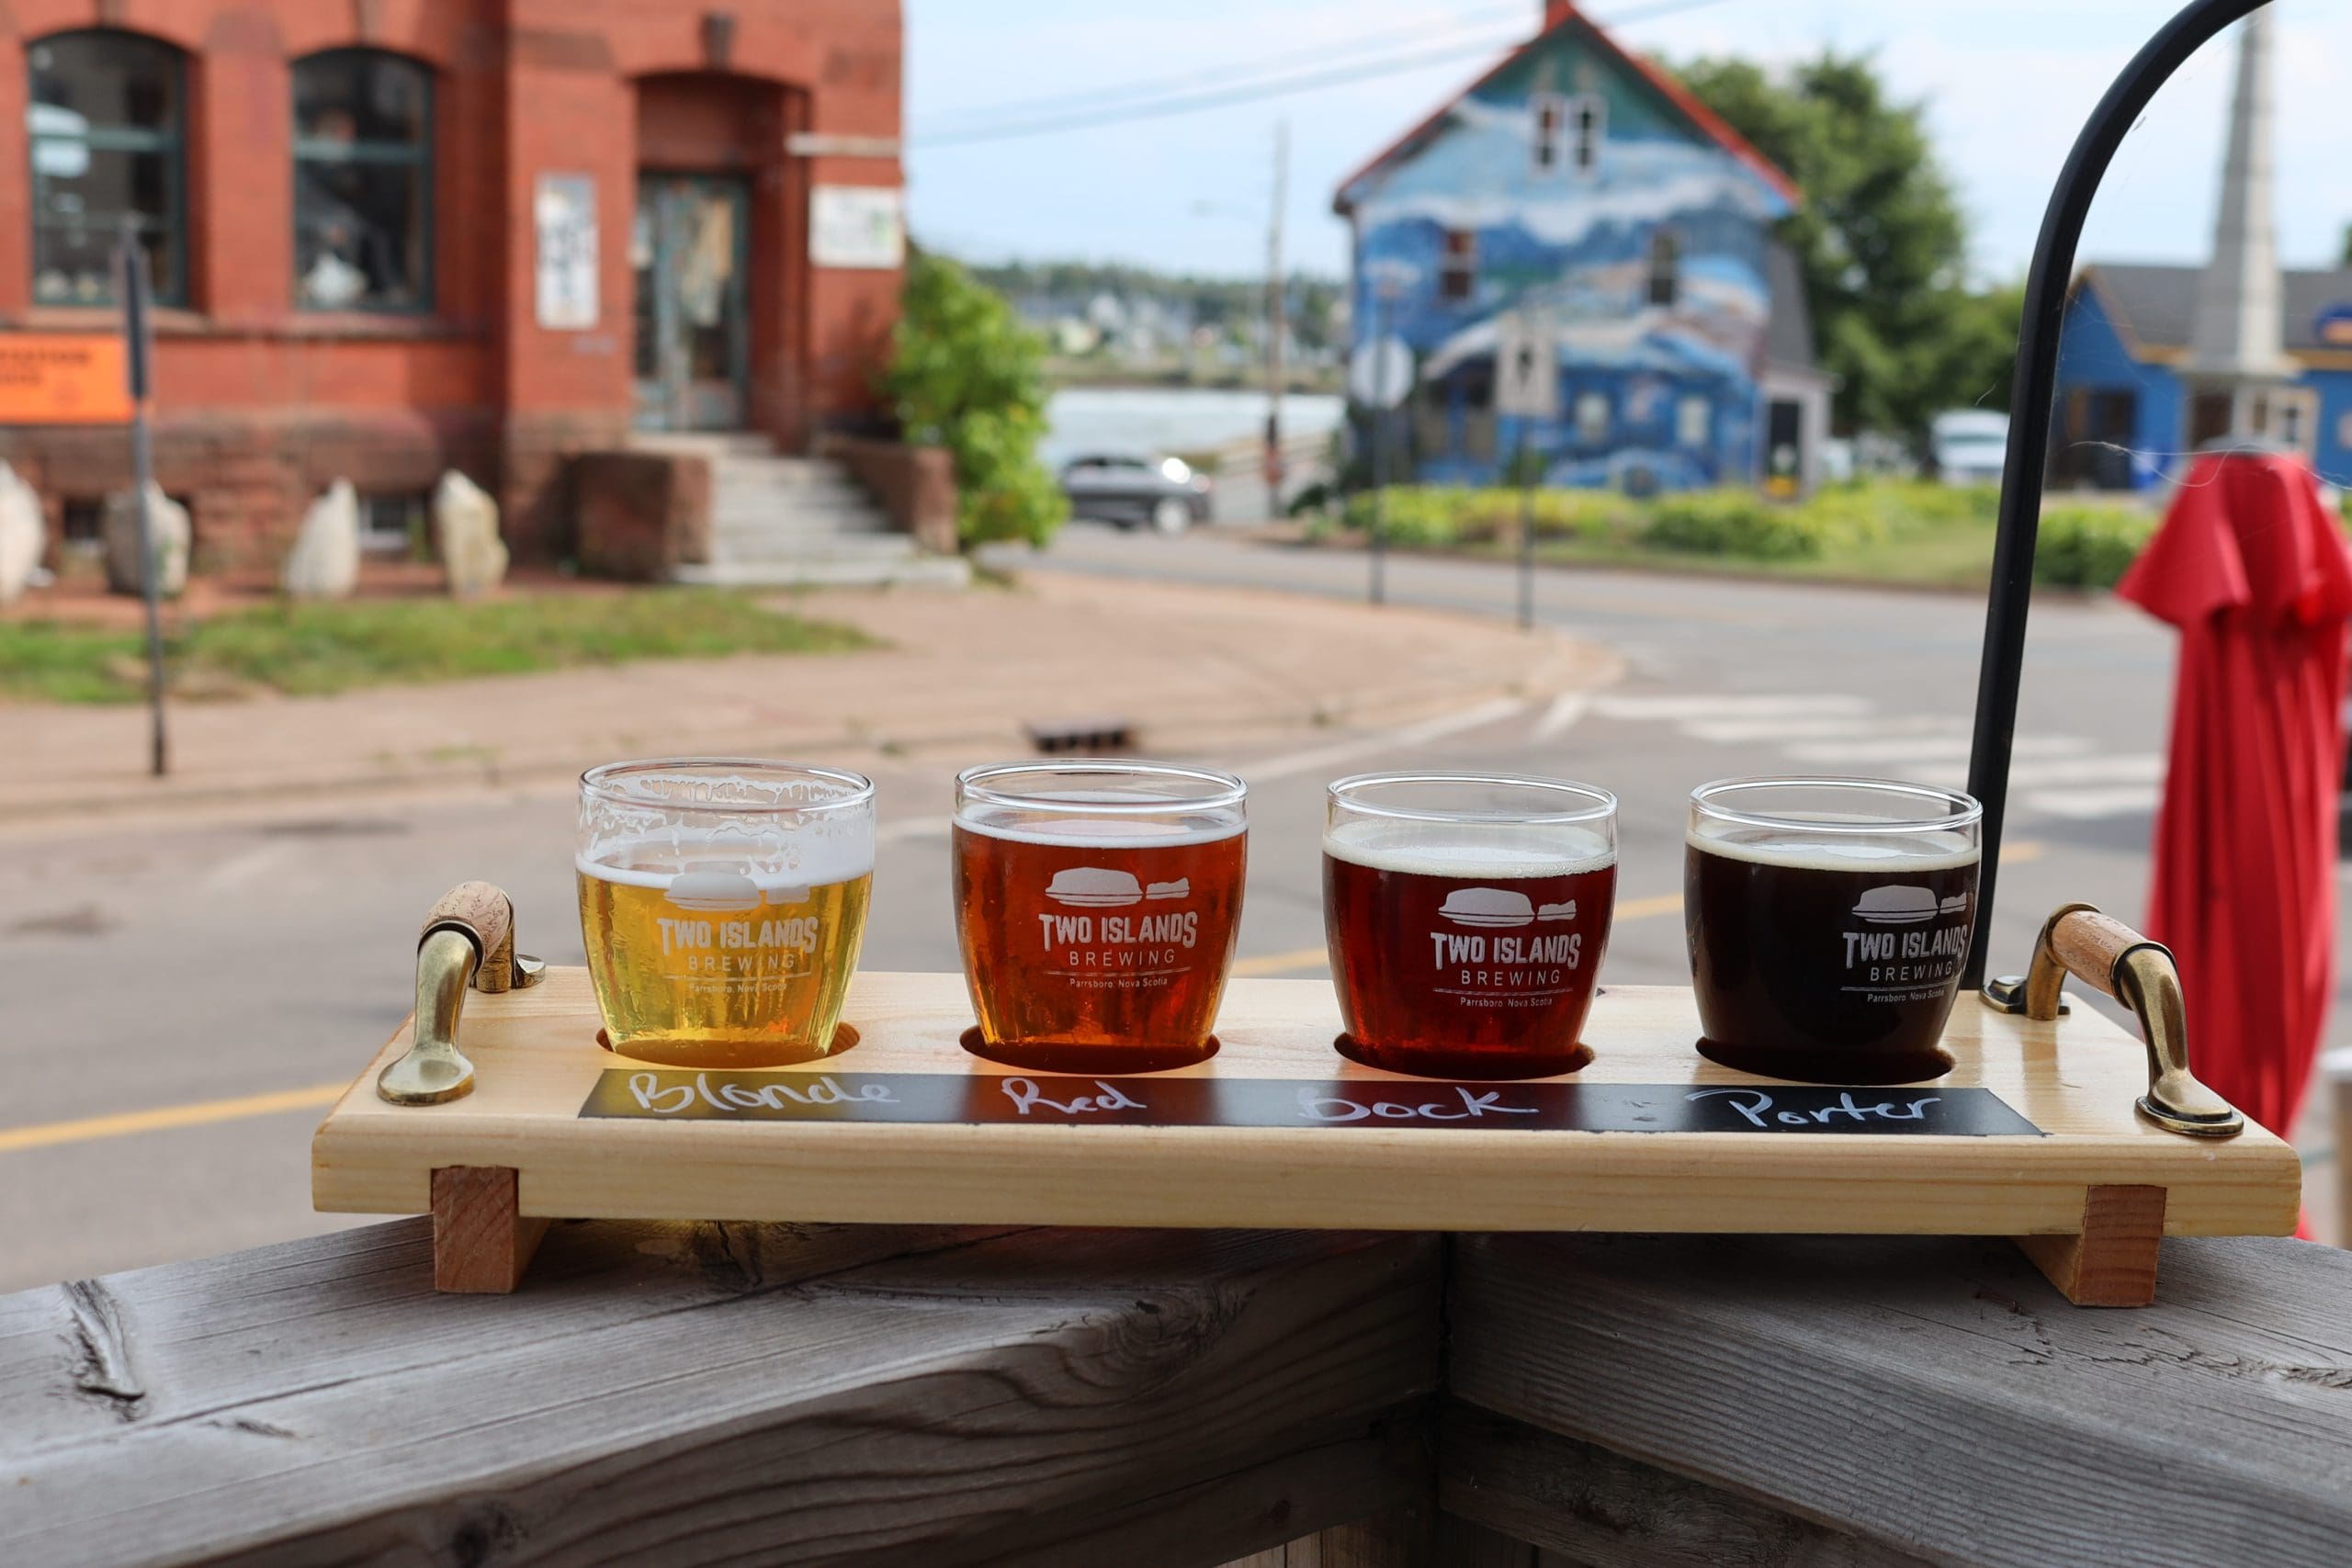 Two Islands Brewing - Brewery in Parssboro Nova Scotia